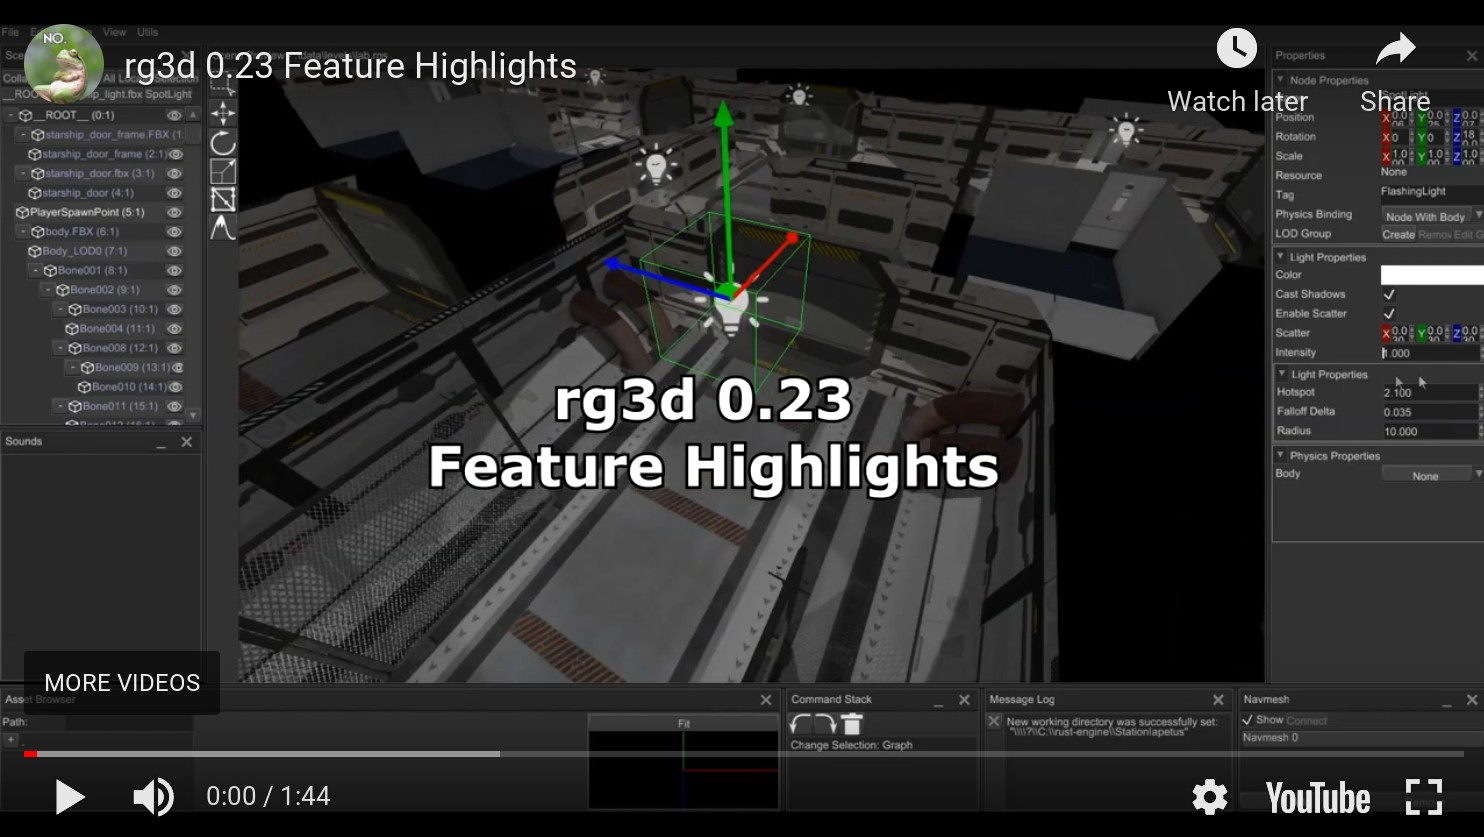 rg3d 0.23 feature highlights video